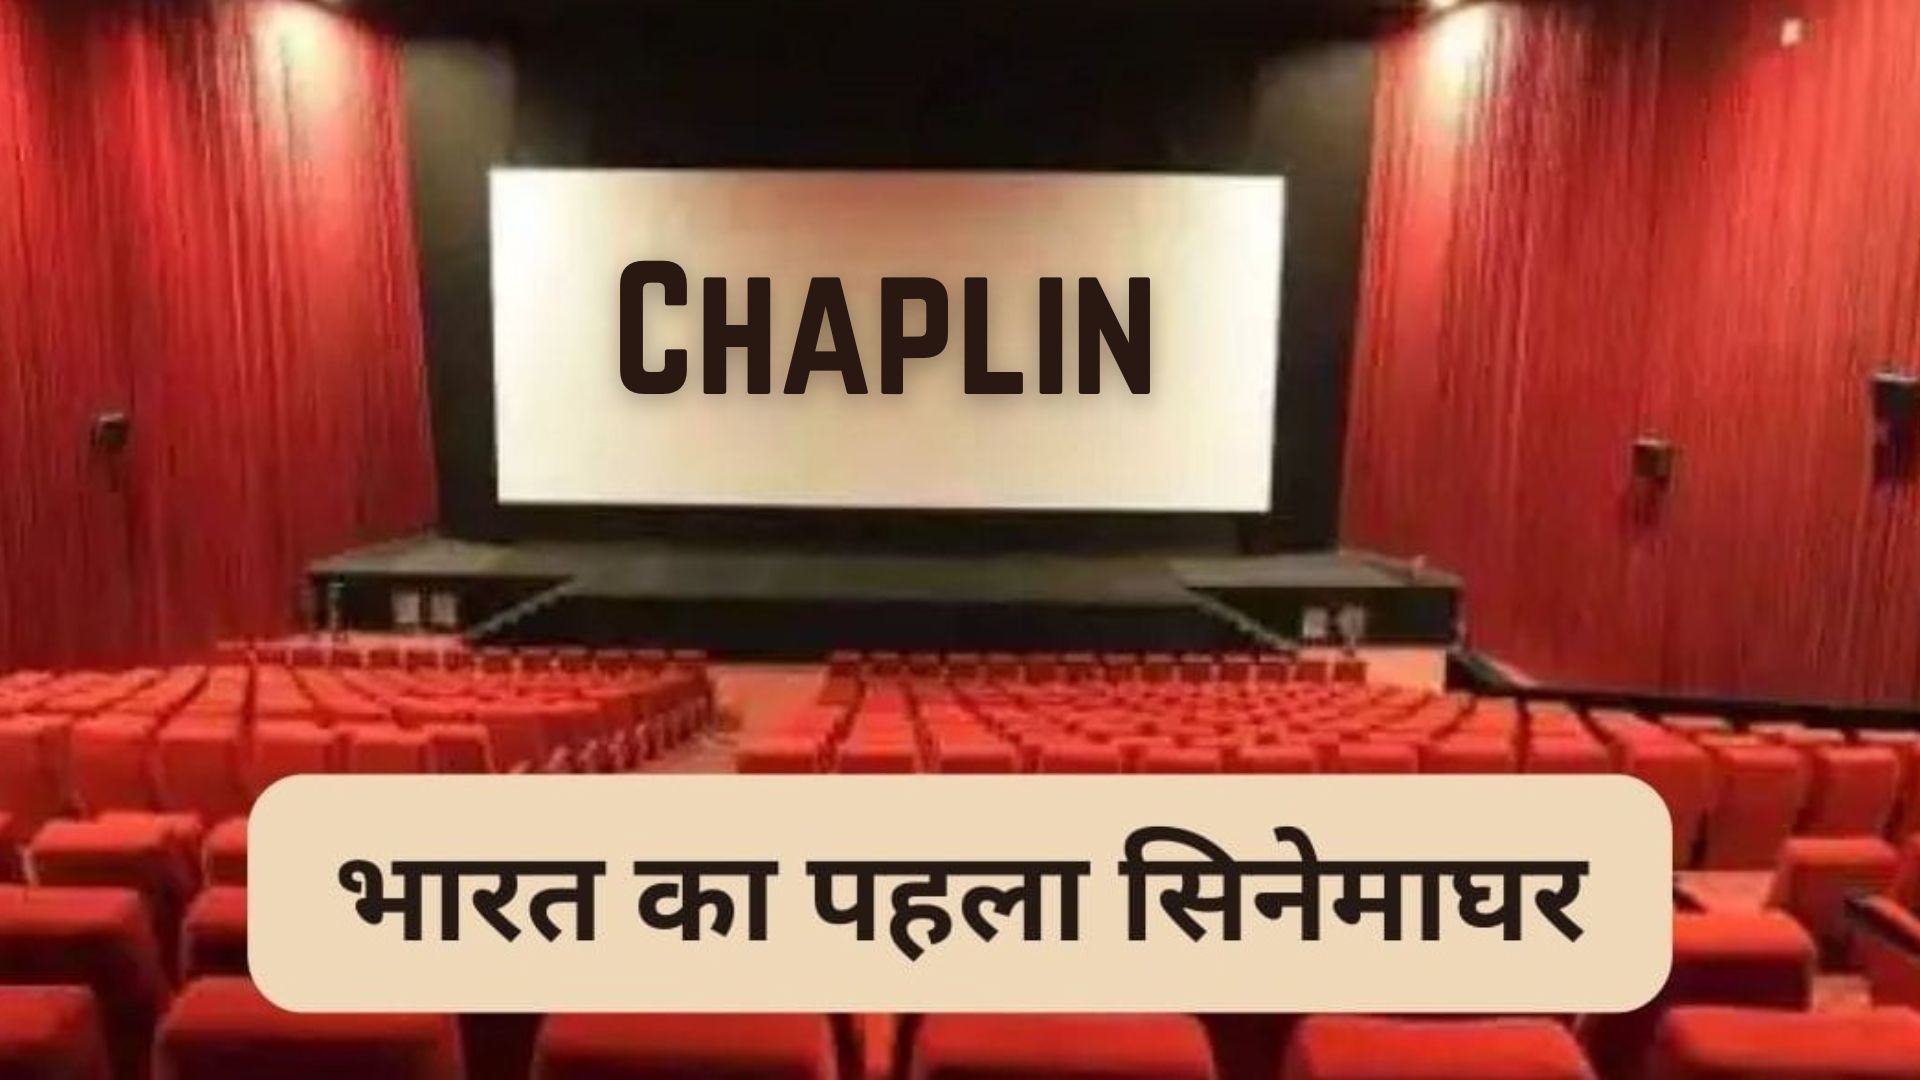 India's first cinema hall